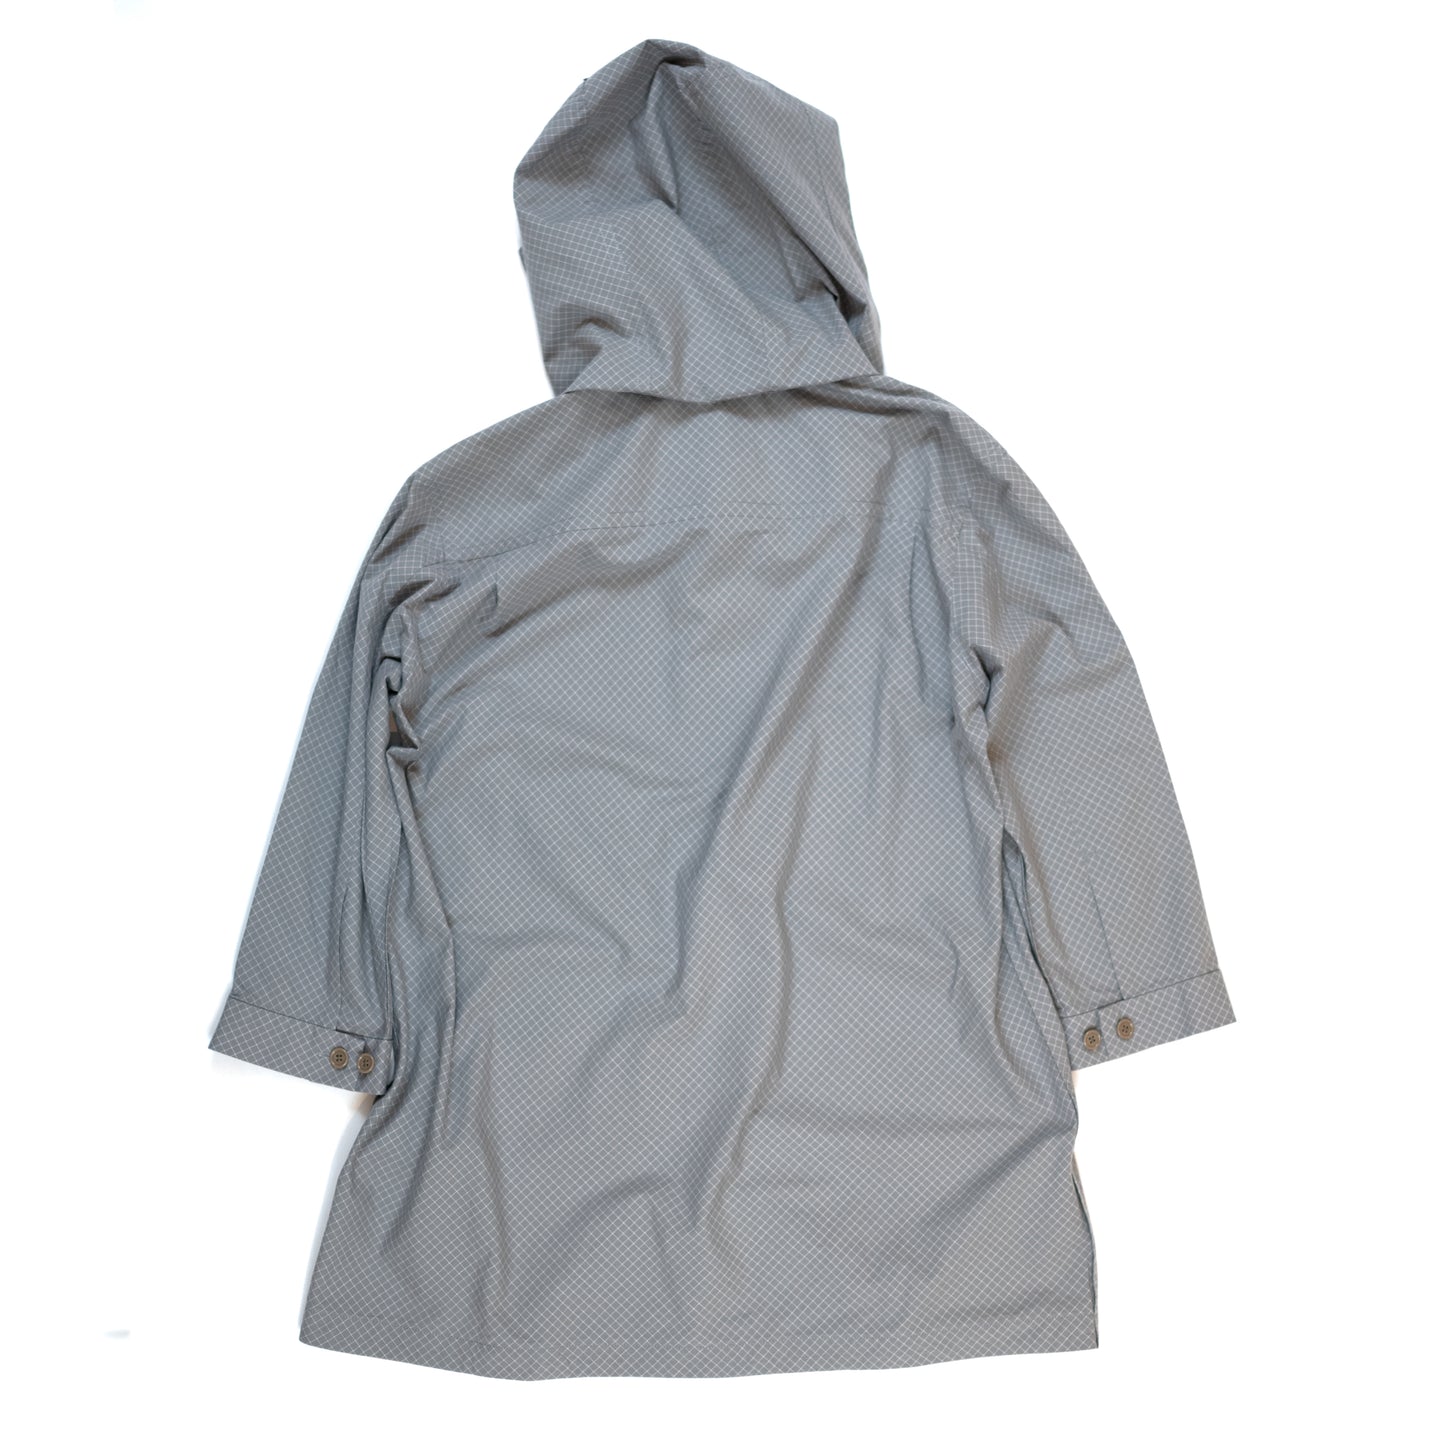 Undercover 'Underman' Hooded 3/4 Sleeve Light Jacket (2011SS)